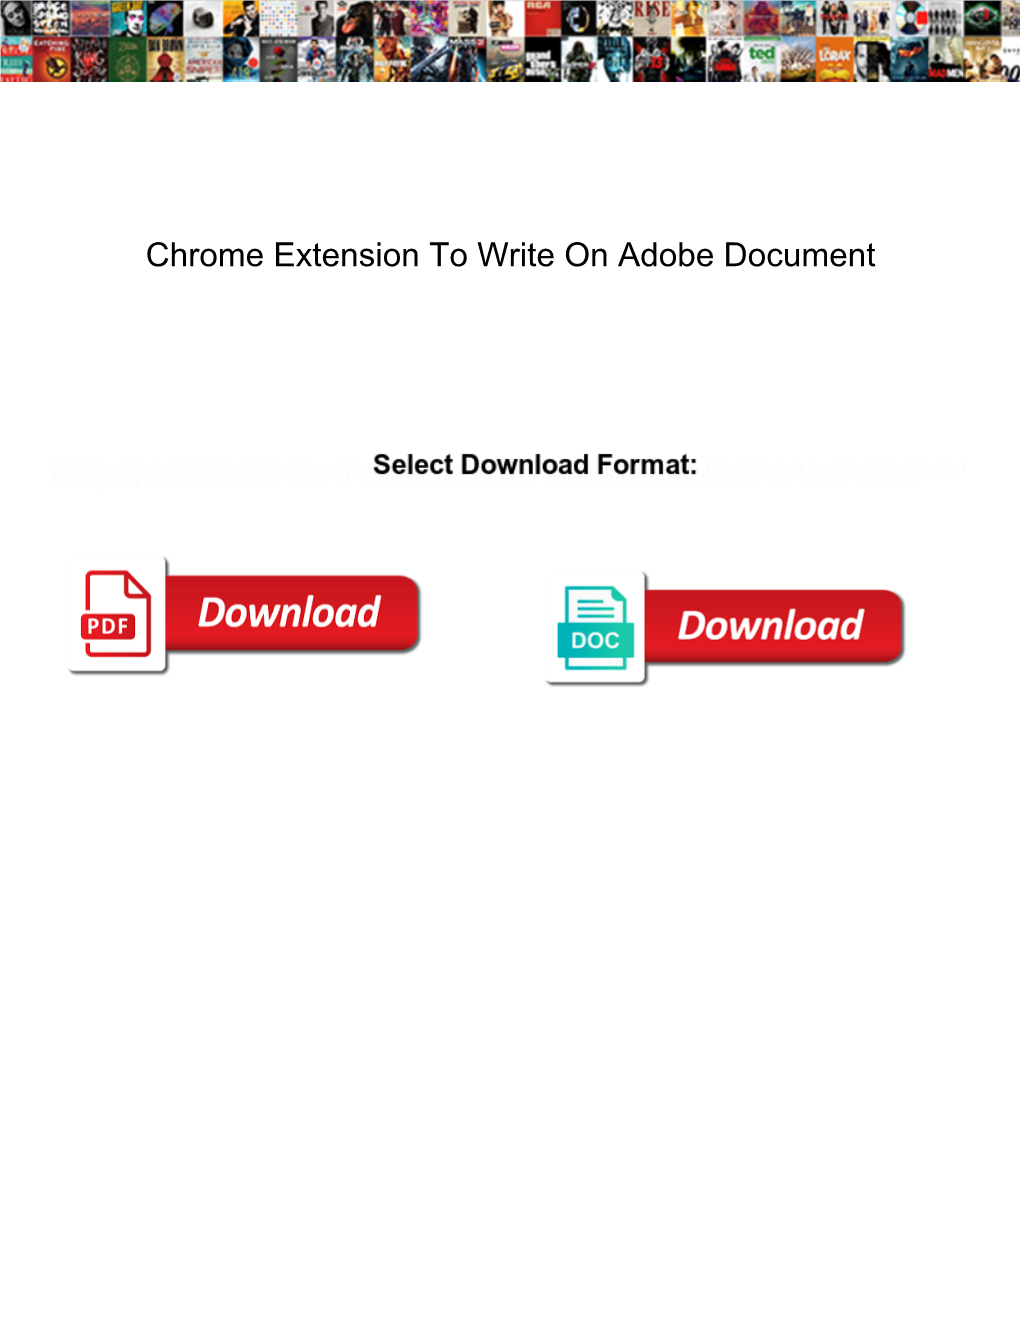 Chrome Extension to Write on Adobe Document